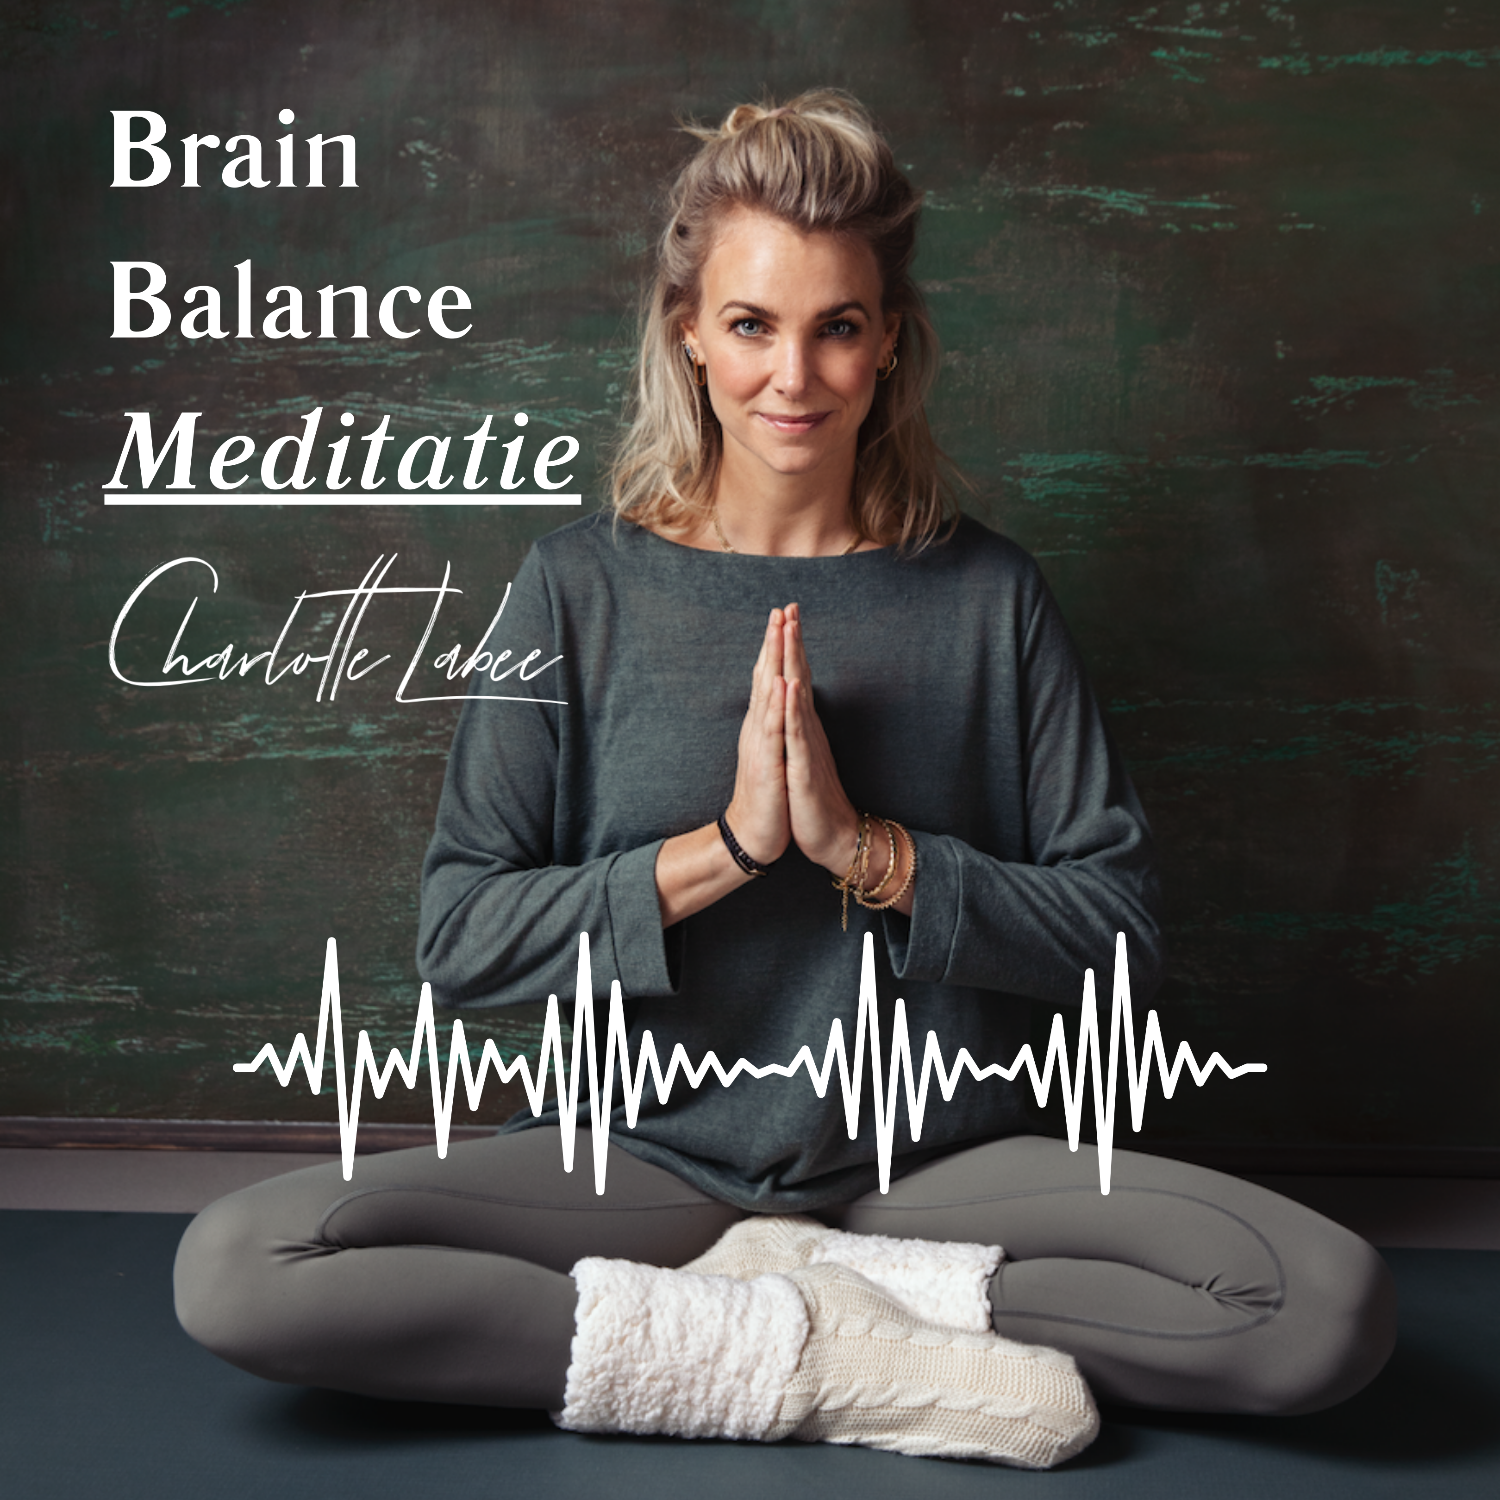 Brain Balance Meditatiepakket Charlotte Labee